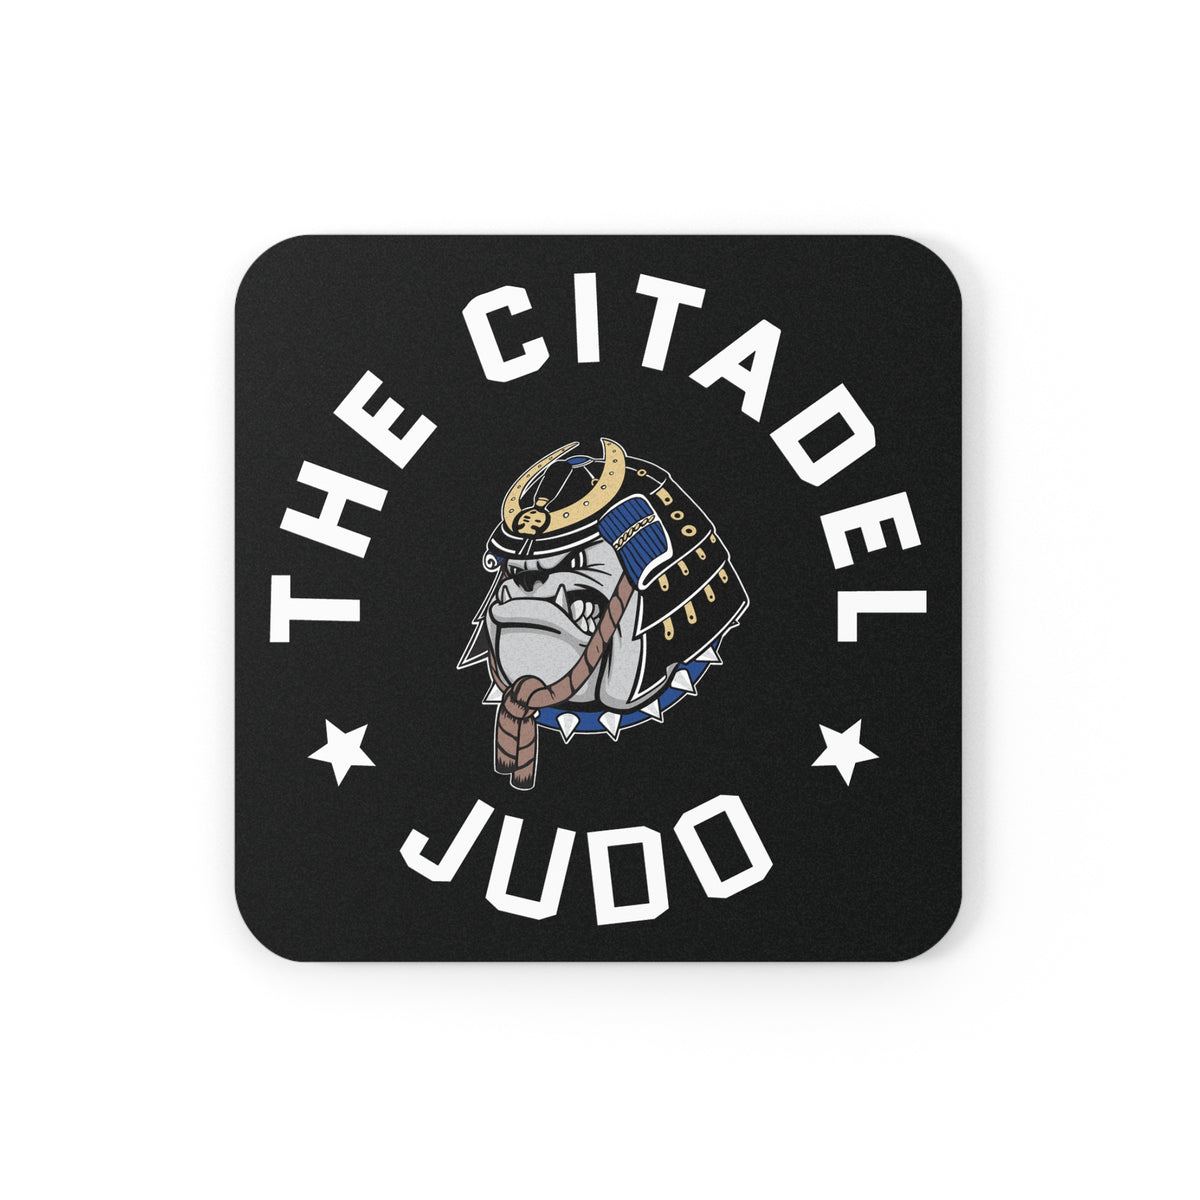 The Citadel, Club Sports - Judo, Cork Back Coaster